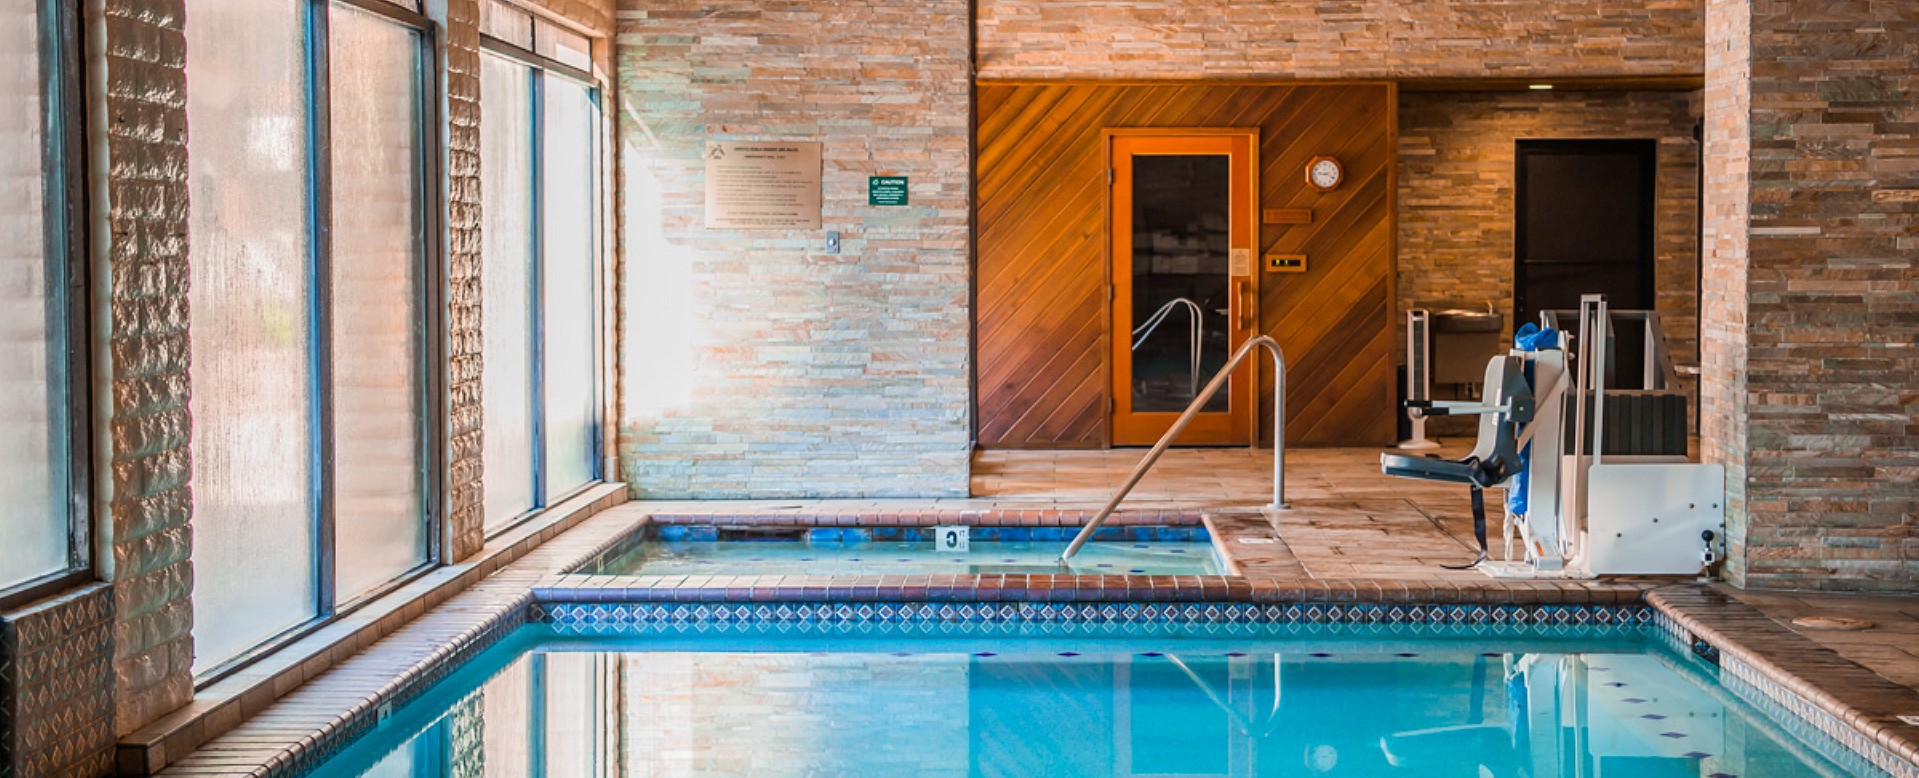 Best Western Plus Arroyo Roble Hotel - Indoor Pool